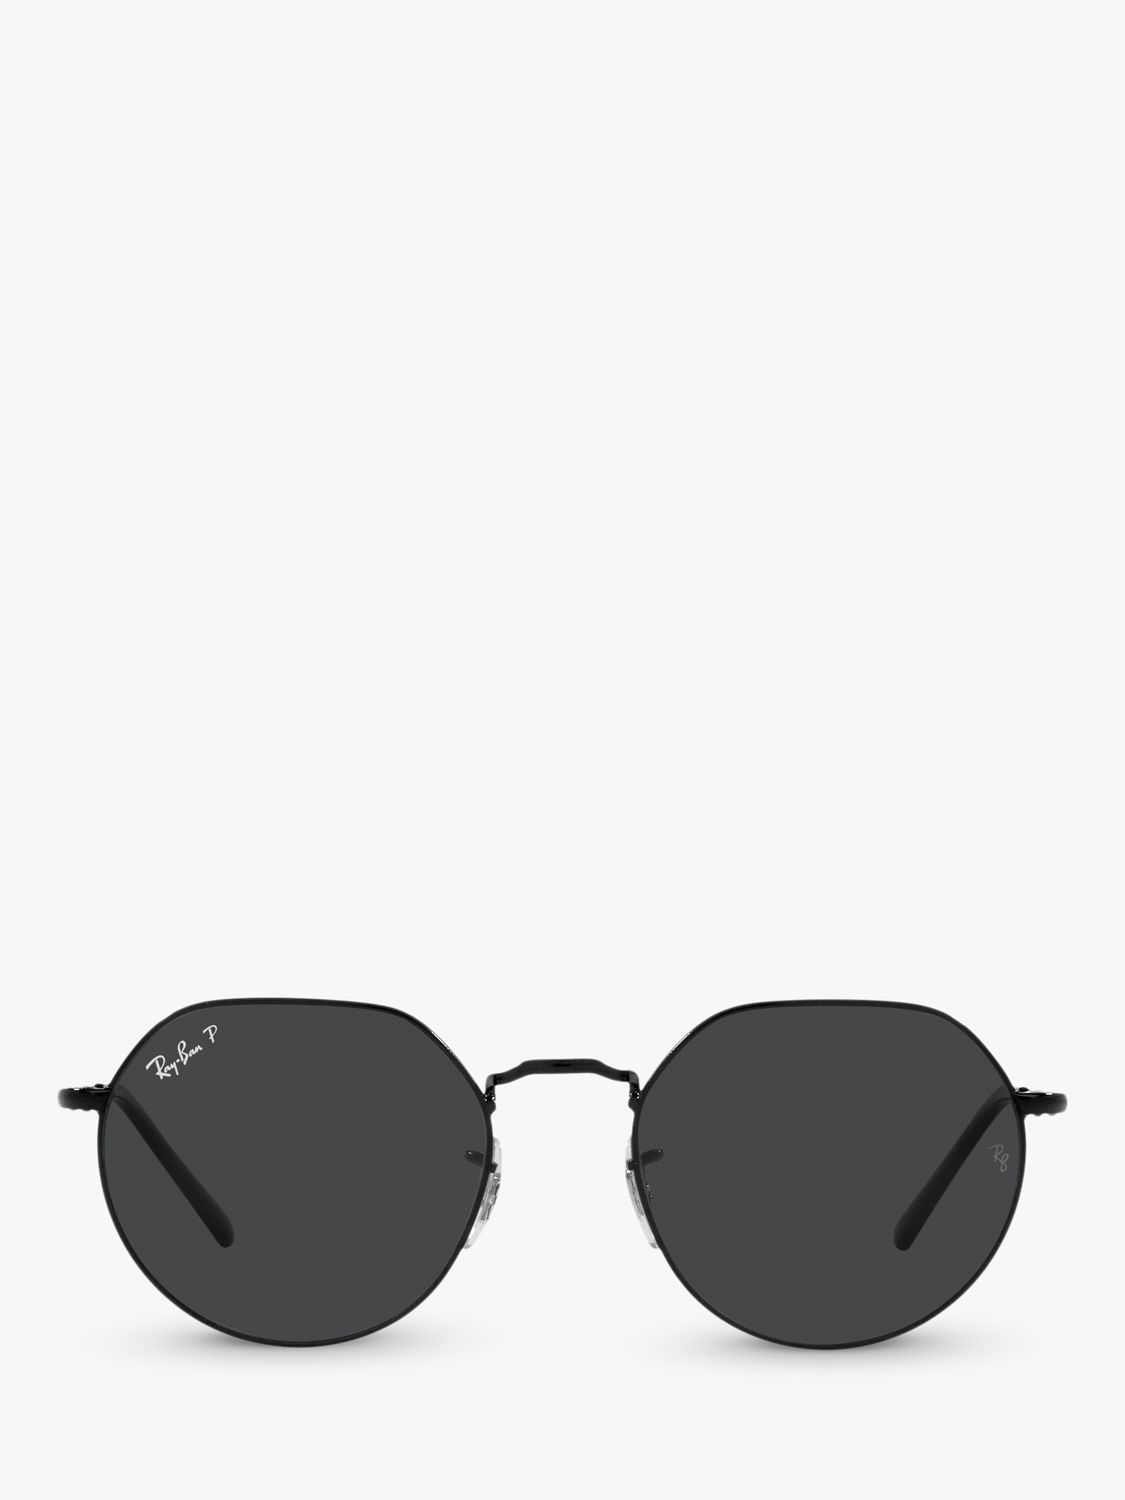 Ray-Ban RB3565 Jack Unisex Polarised Metal Hexagonal Sunglasses, Black